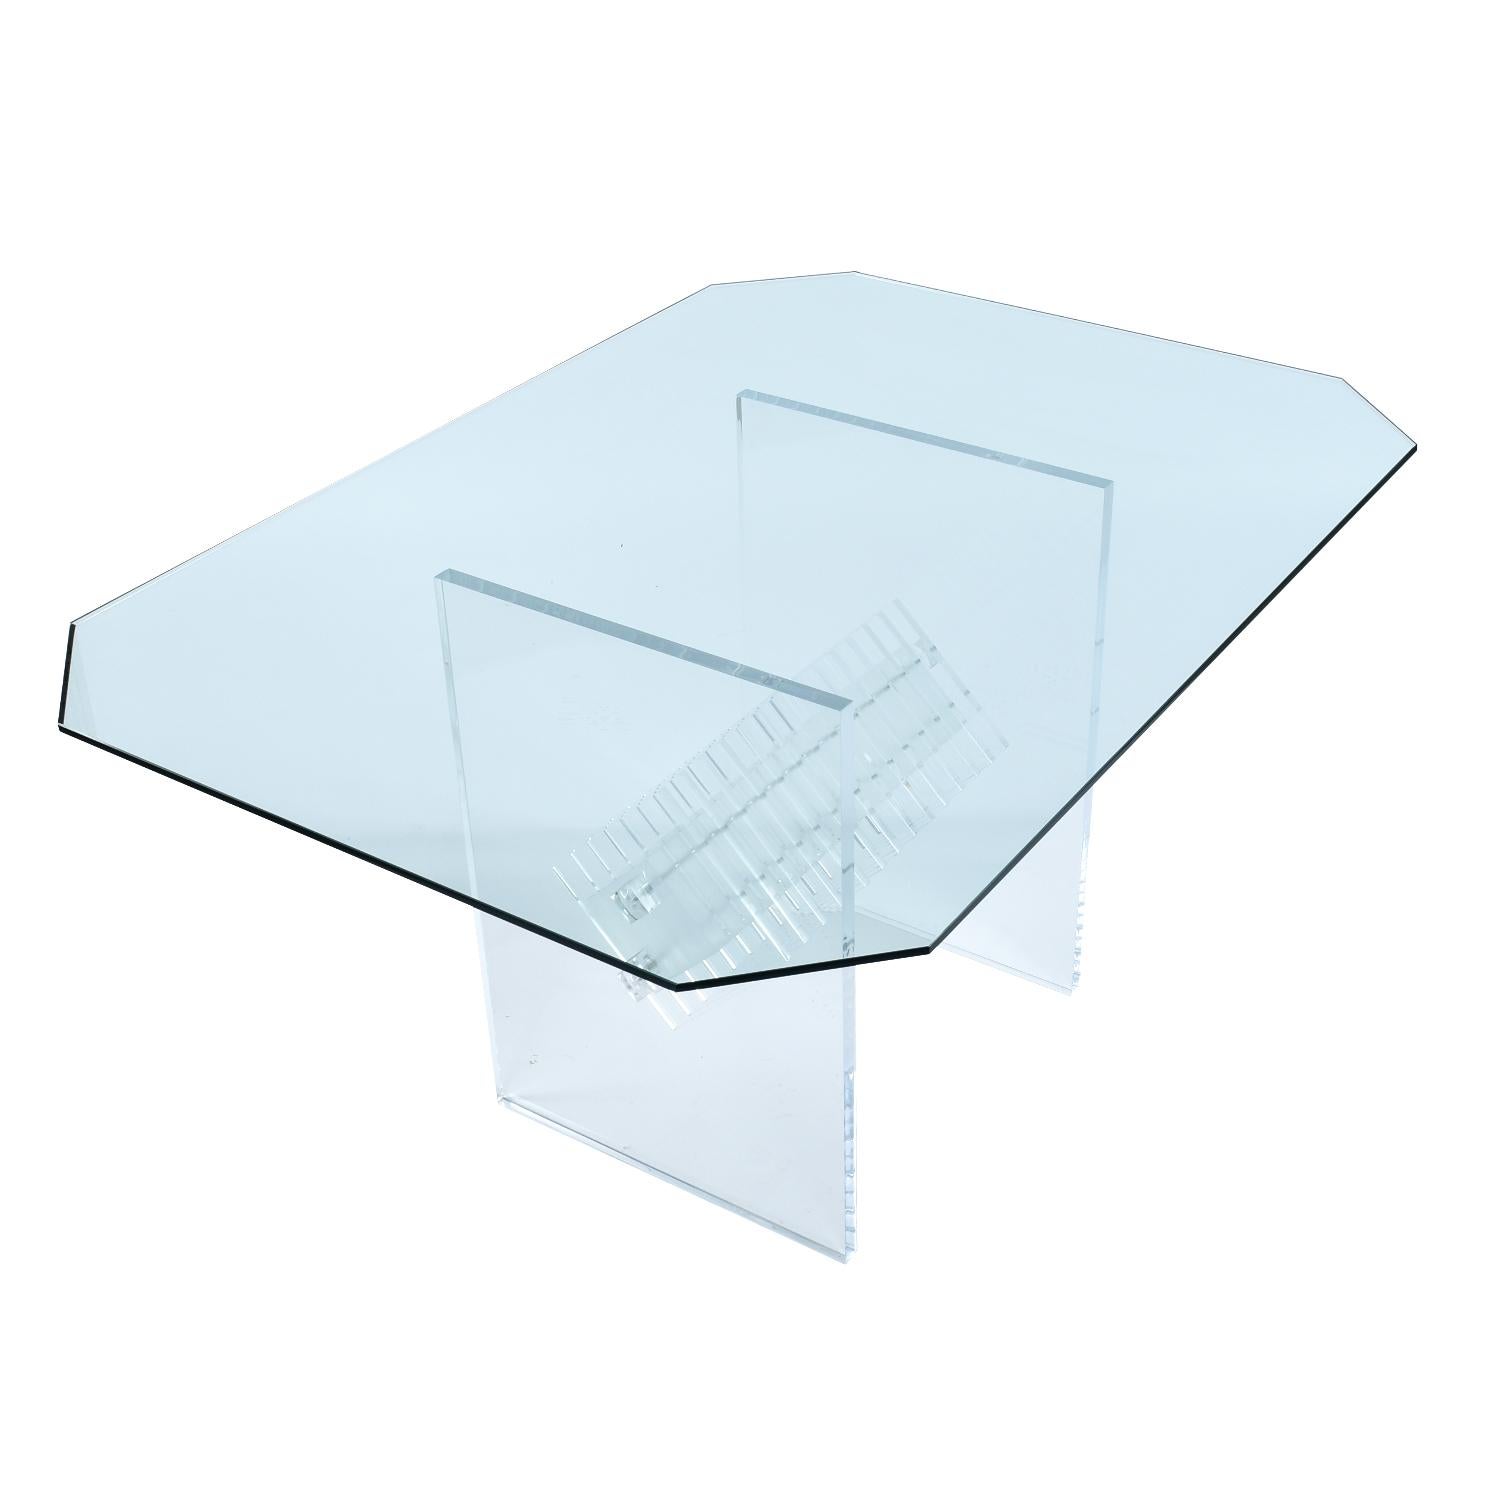 diamond shaped dining table